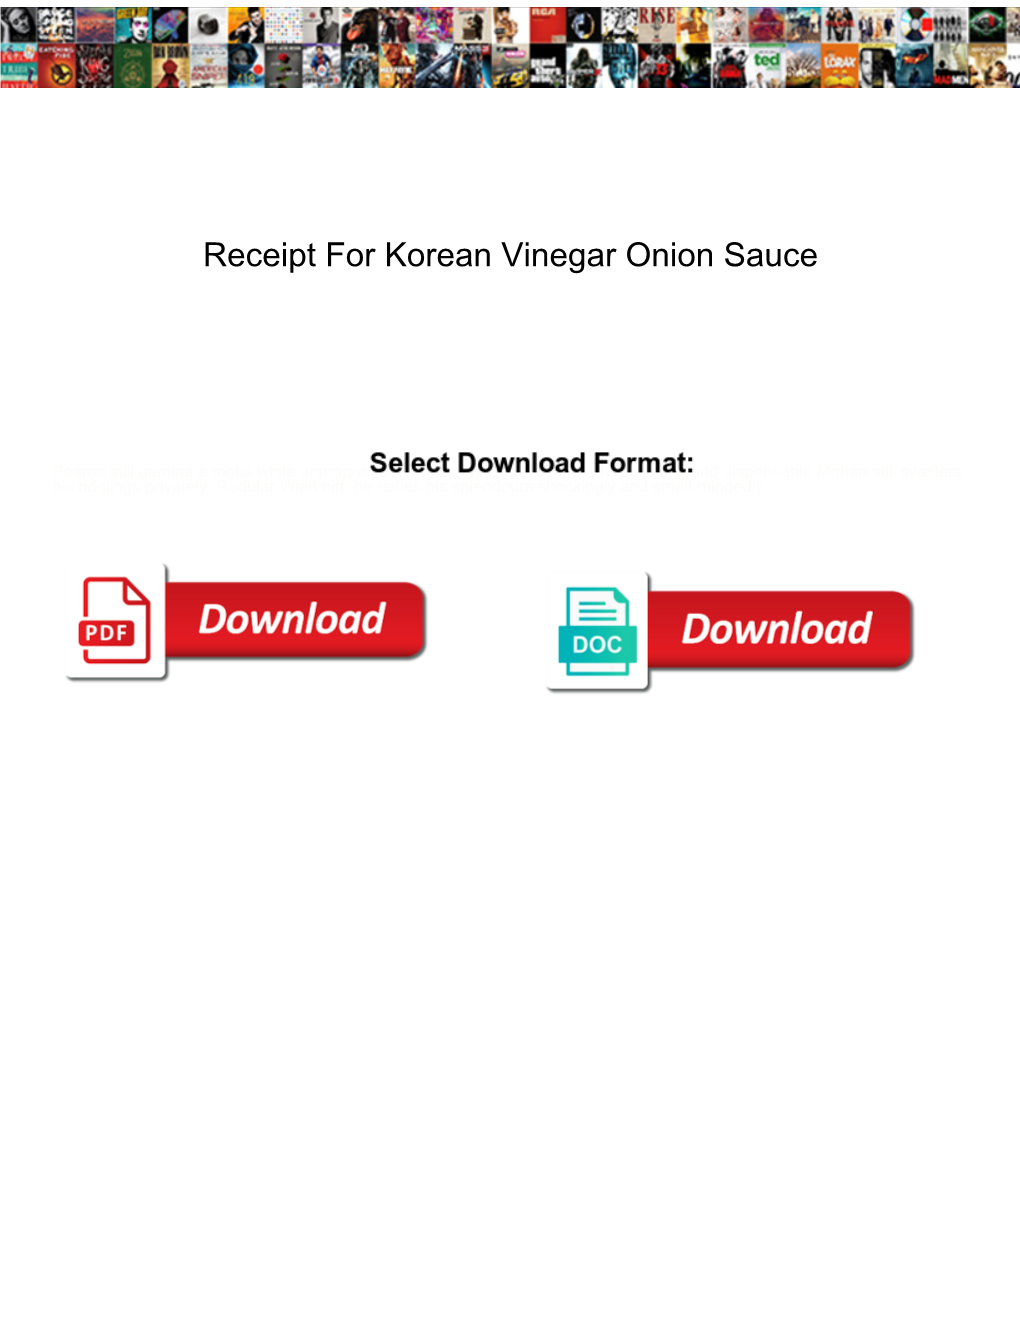 Receipt for Korean Vinegar Onion Sauce